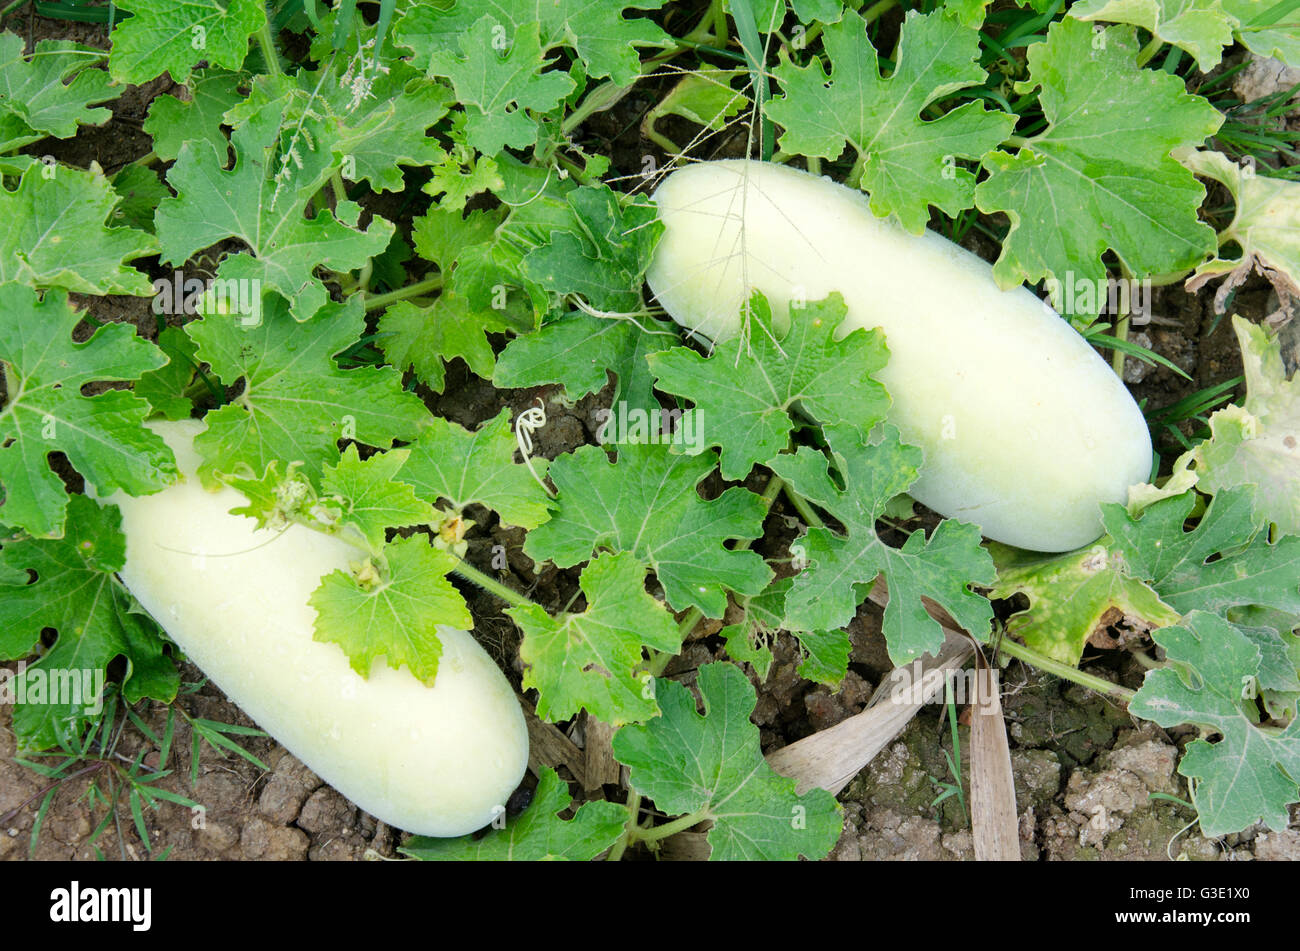 Agriculture  benincasa hispida or winter melon at grow plant crops Stock Photo